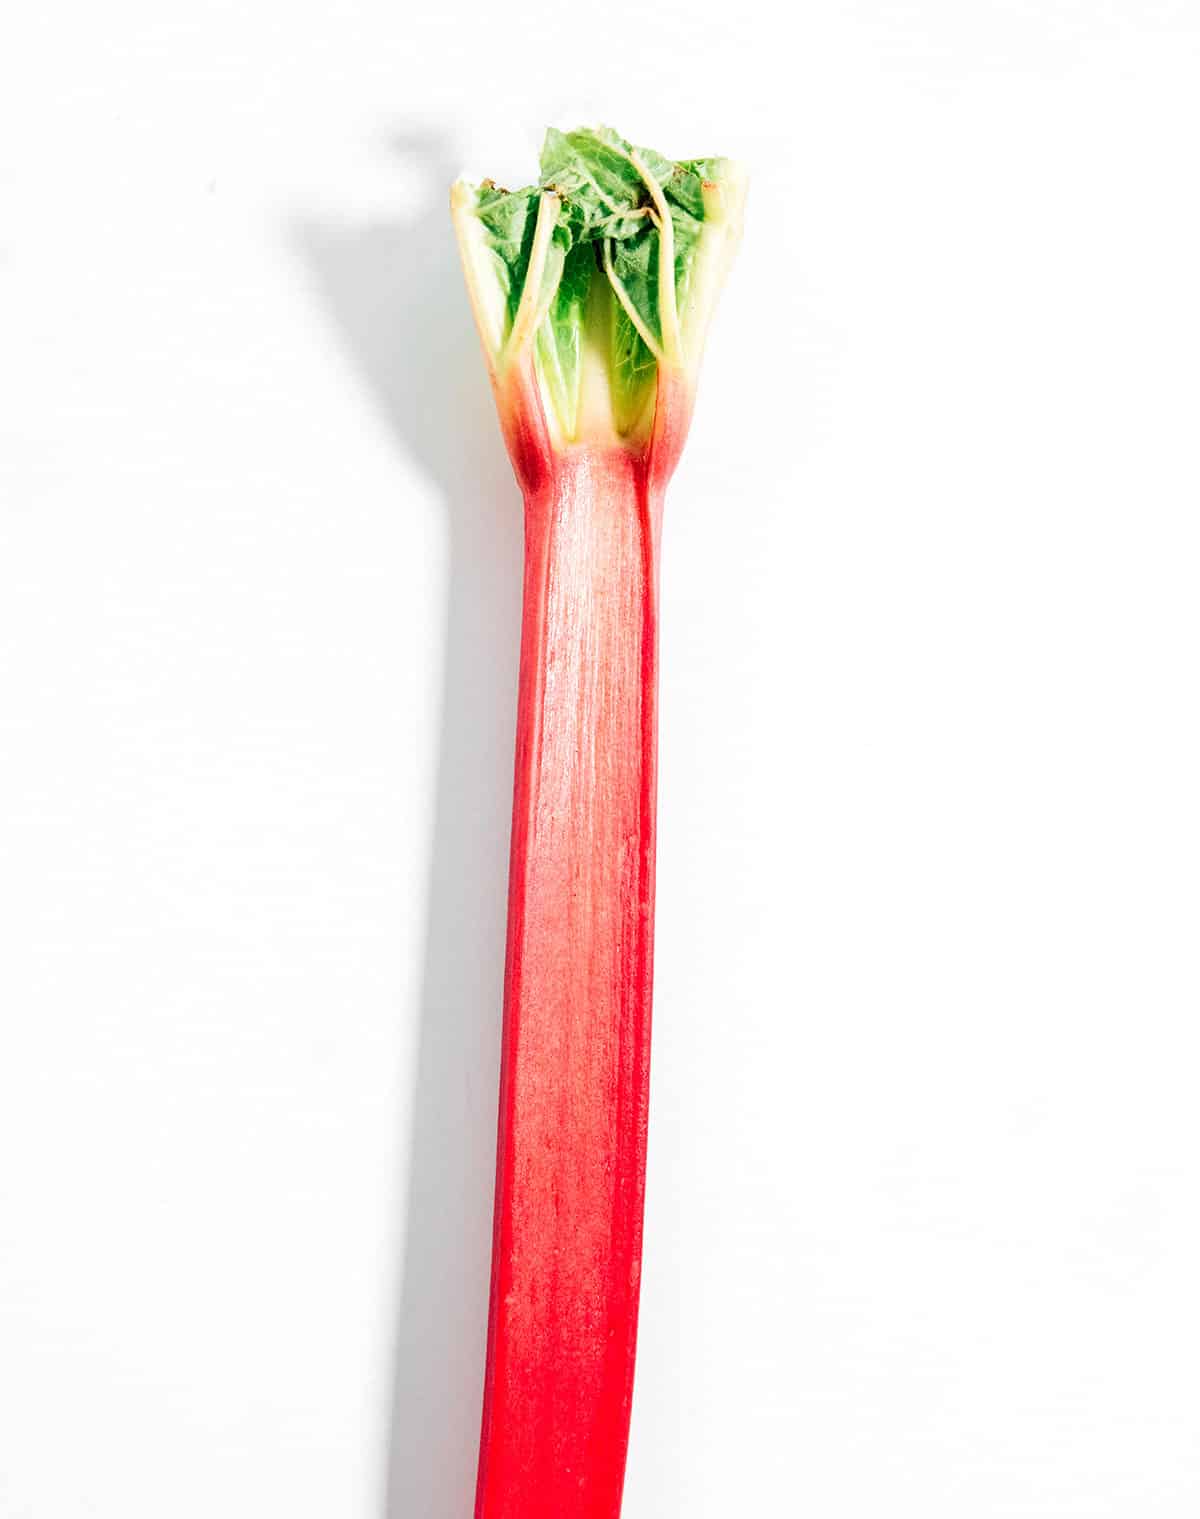 A rhubarb stalk on a white background.